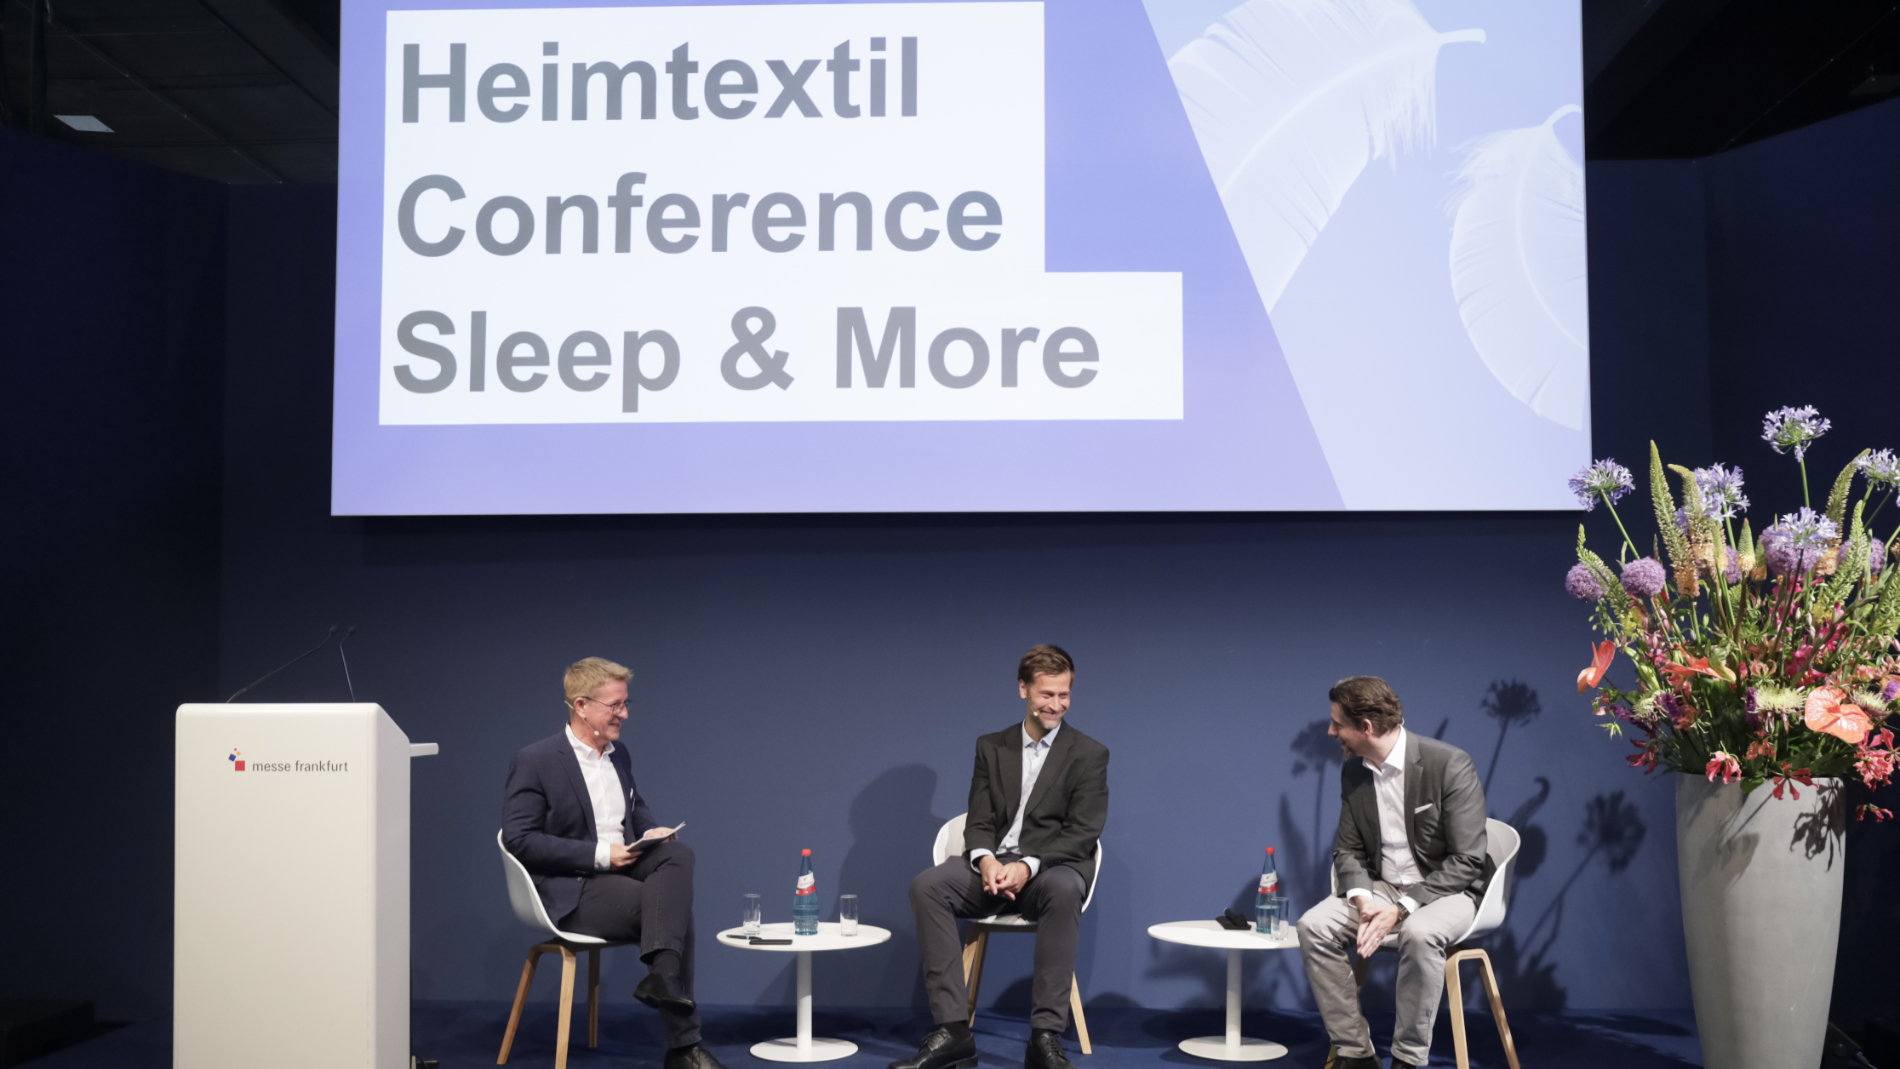 Heimtextil Conference: Sleep & More